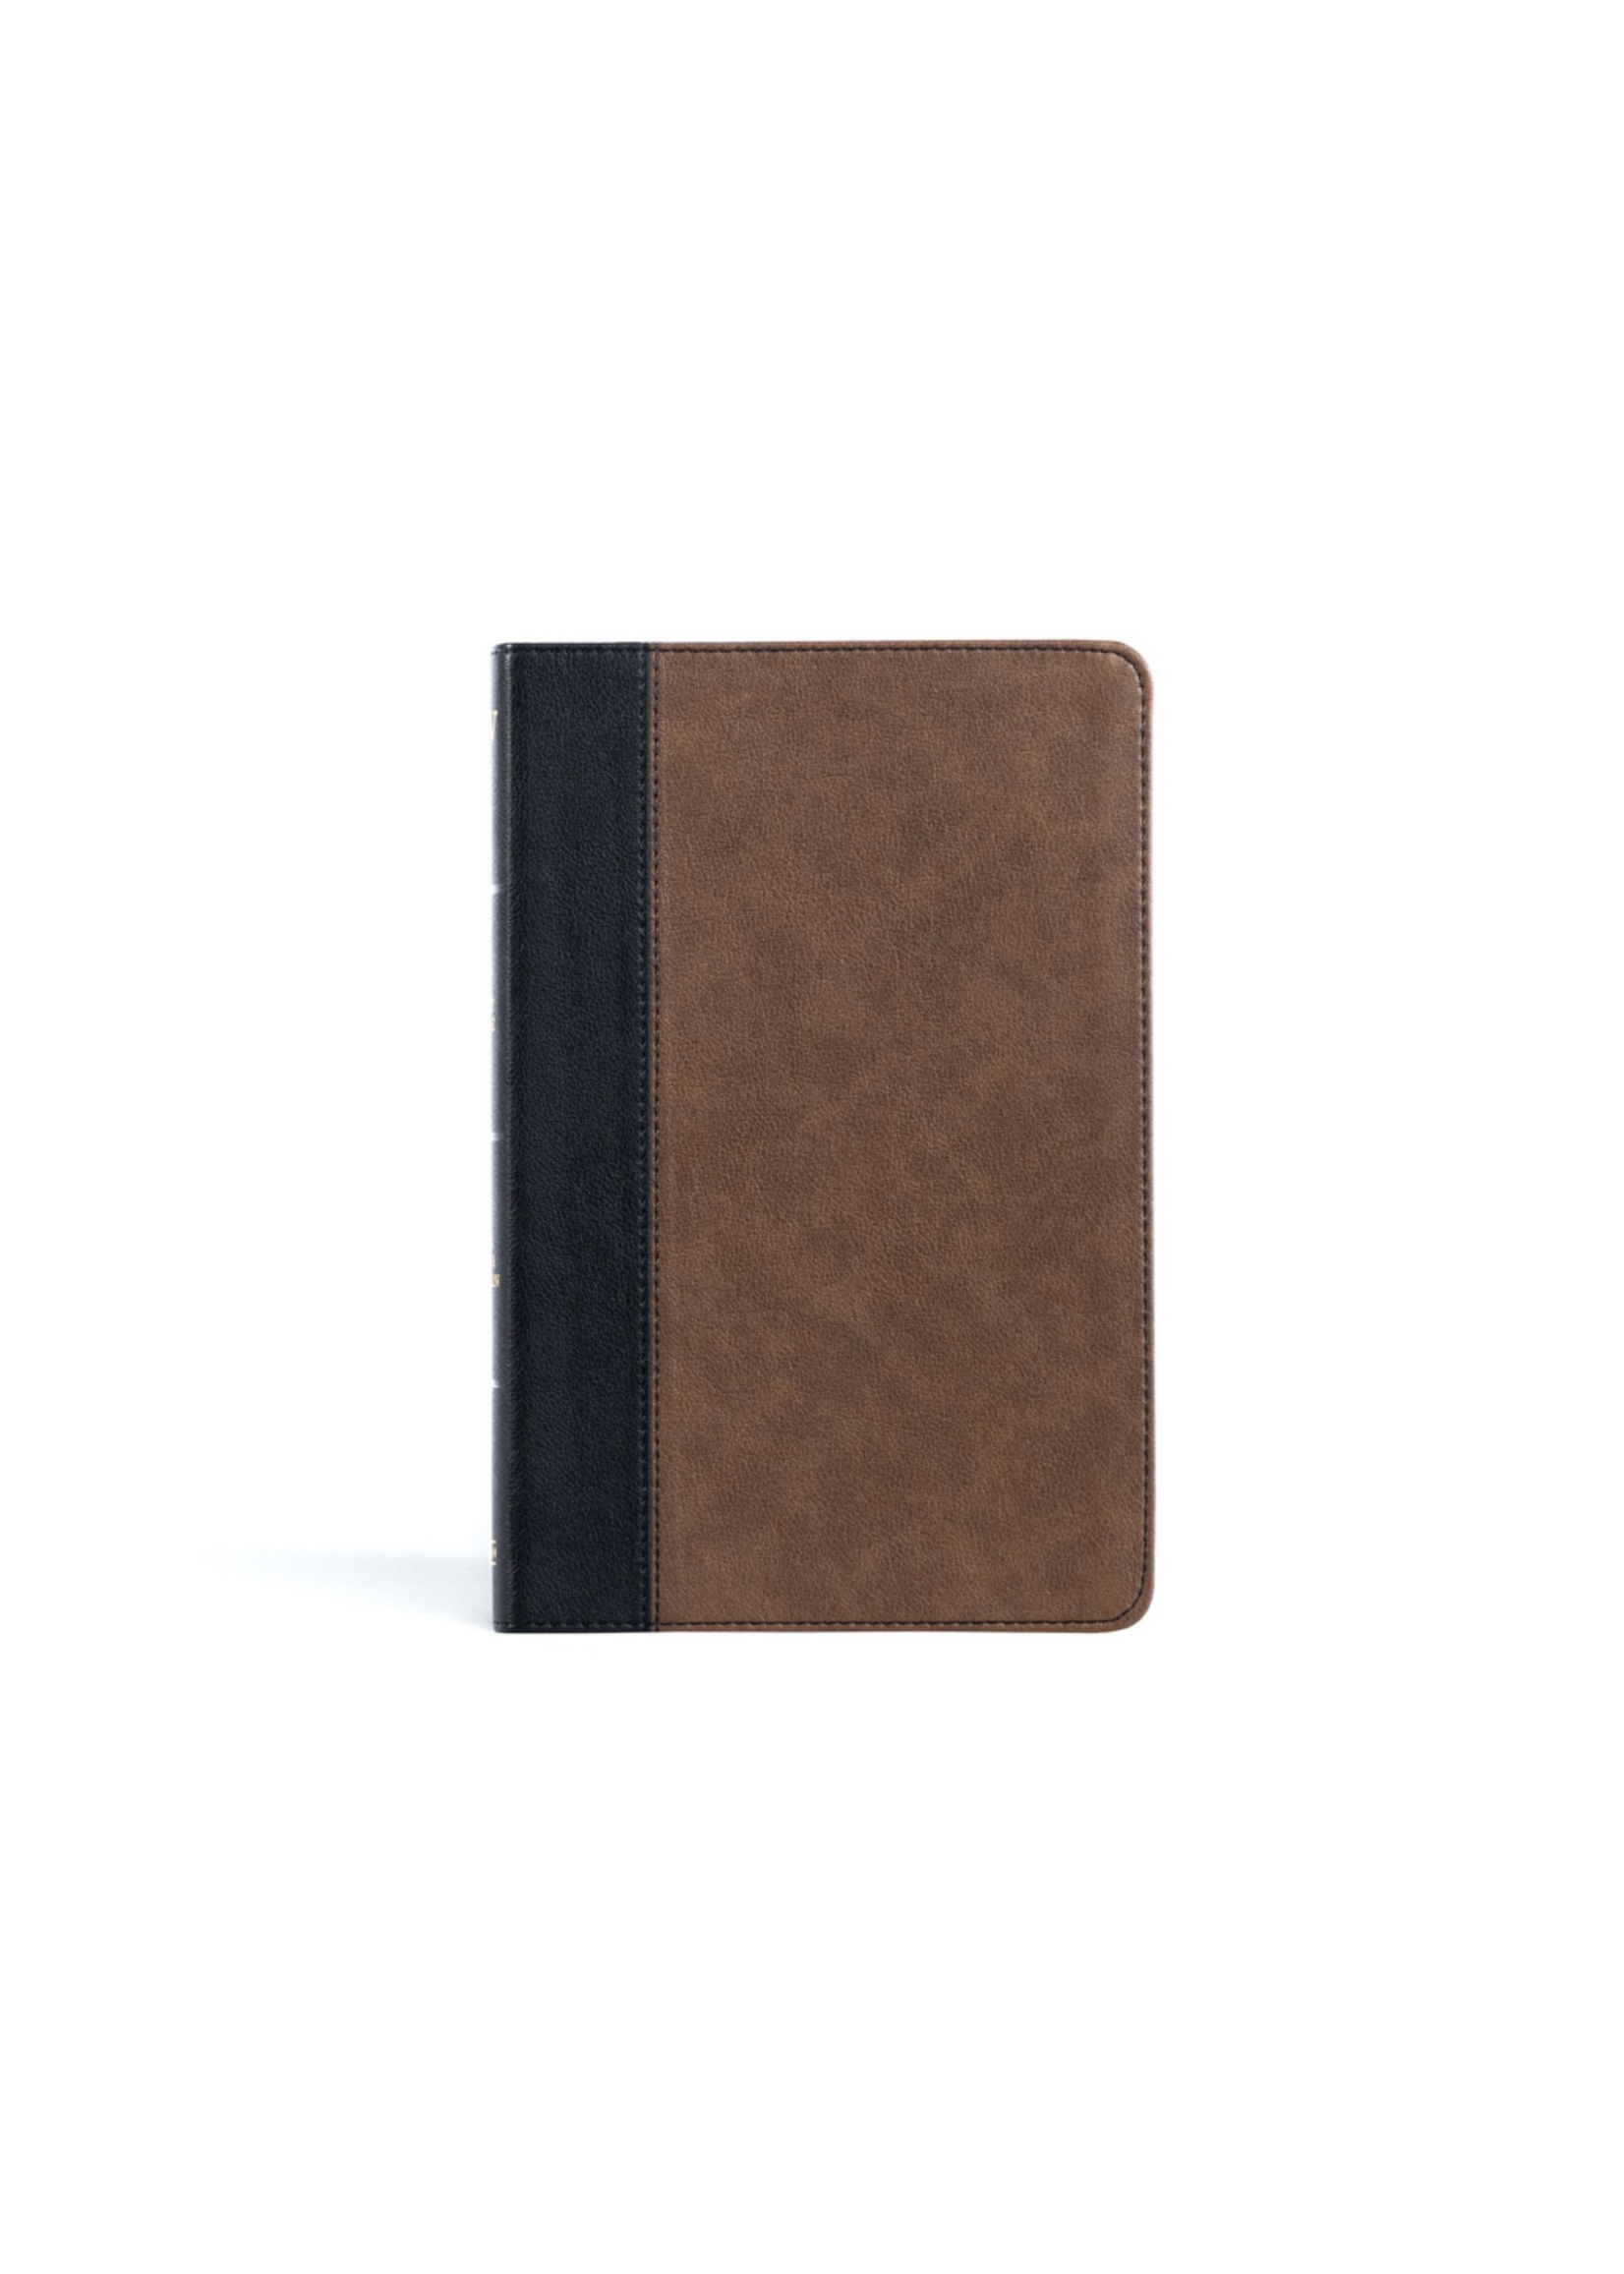 KJV Thinline Bible, Black/Brown LeatherTouch